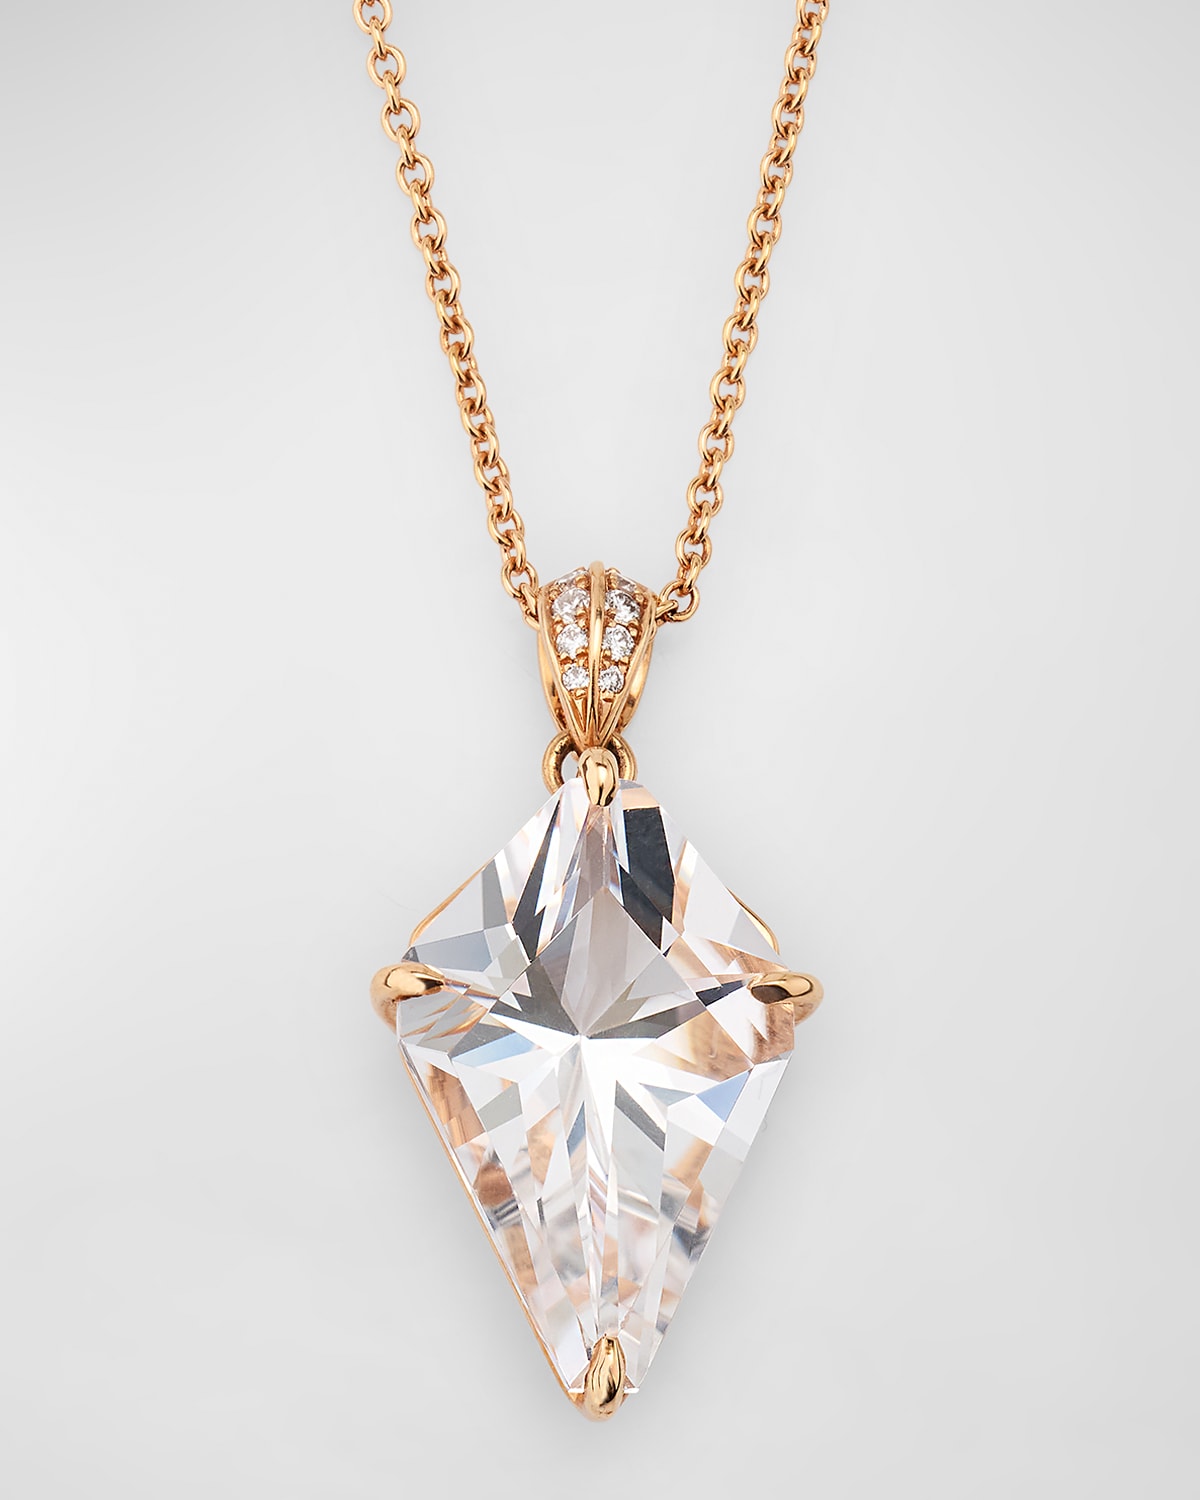 Lisa Nik 18k Rose Gold Kite Shaped Clear Quartz Pendant Necklace With Diamonds